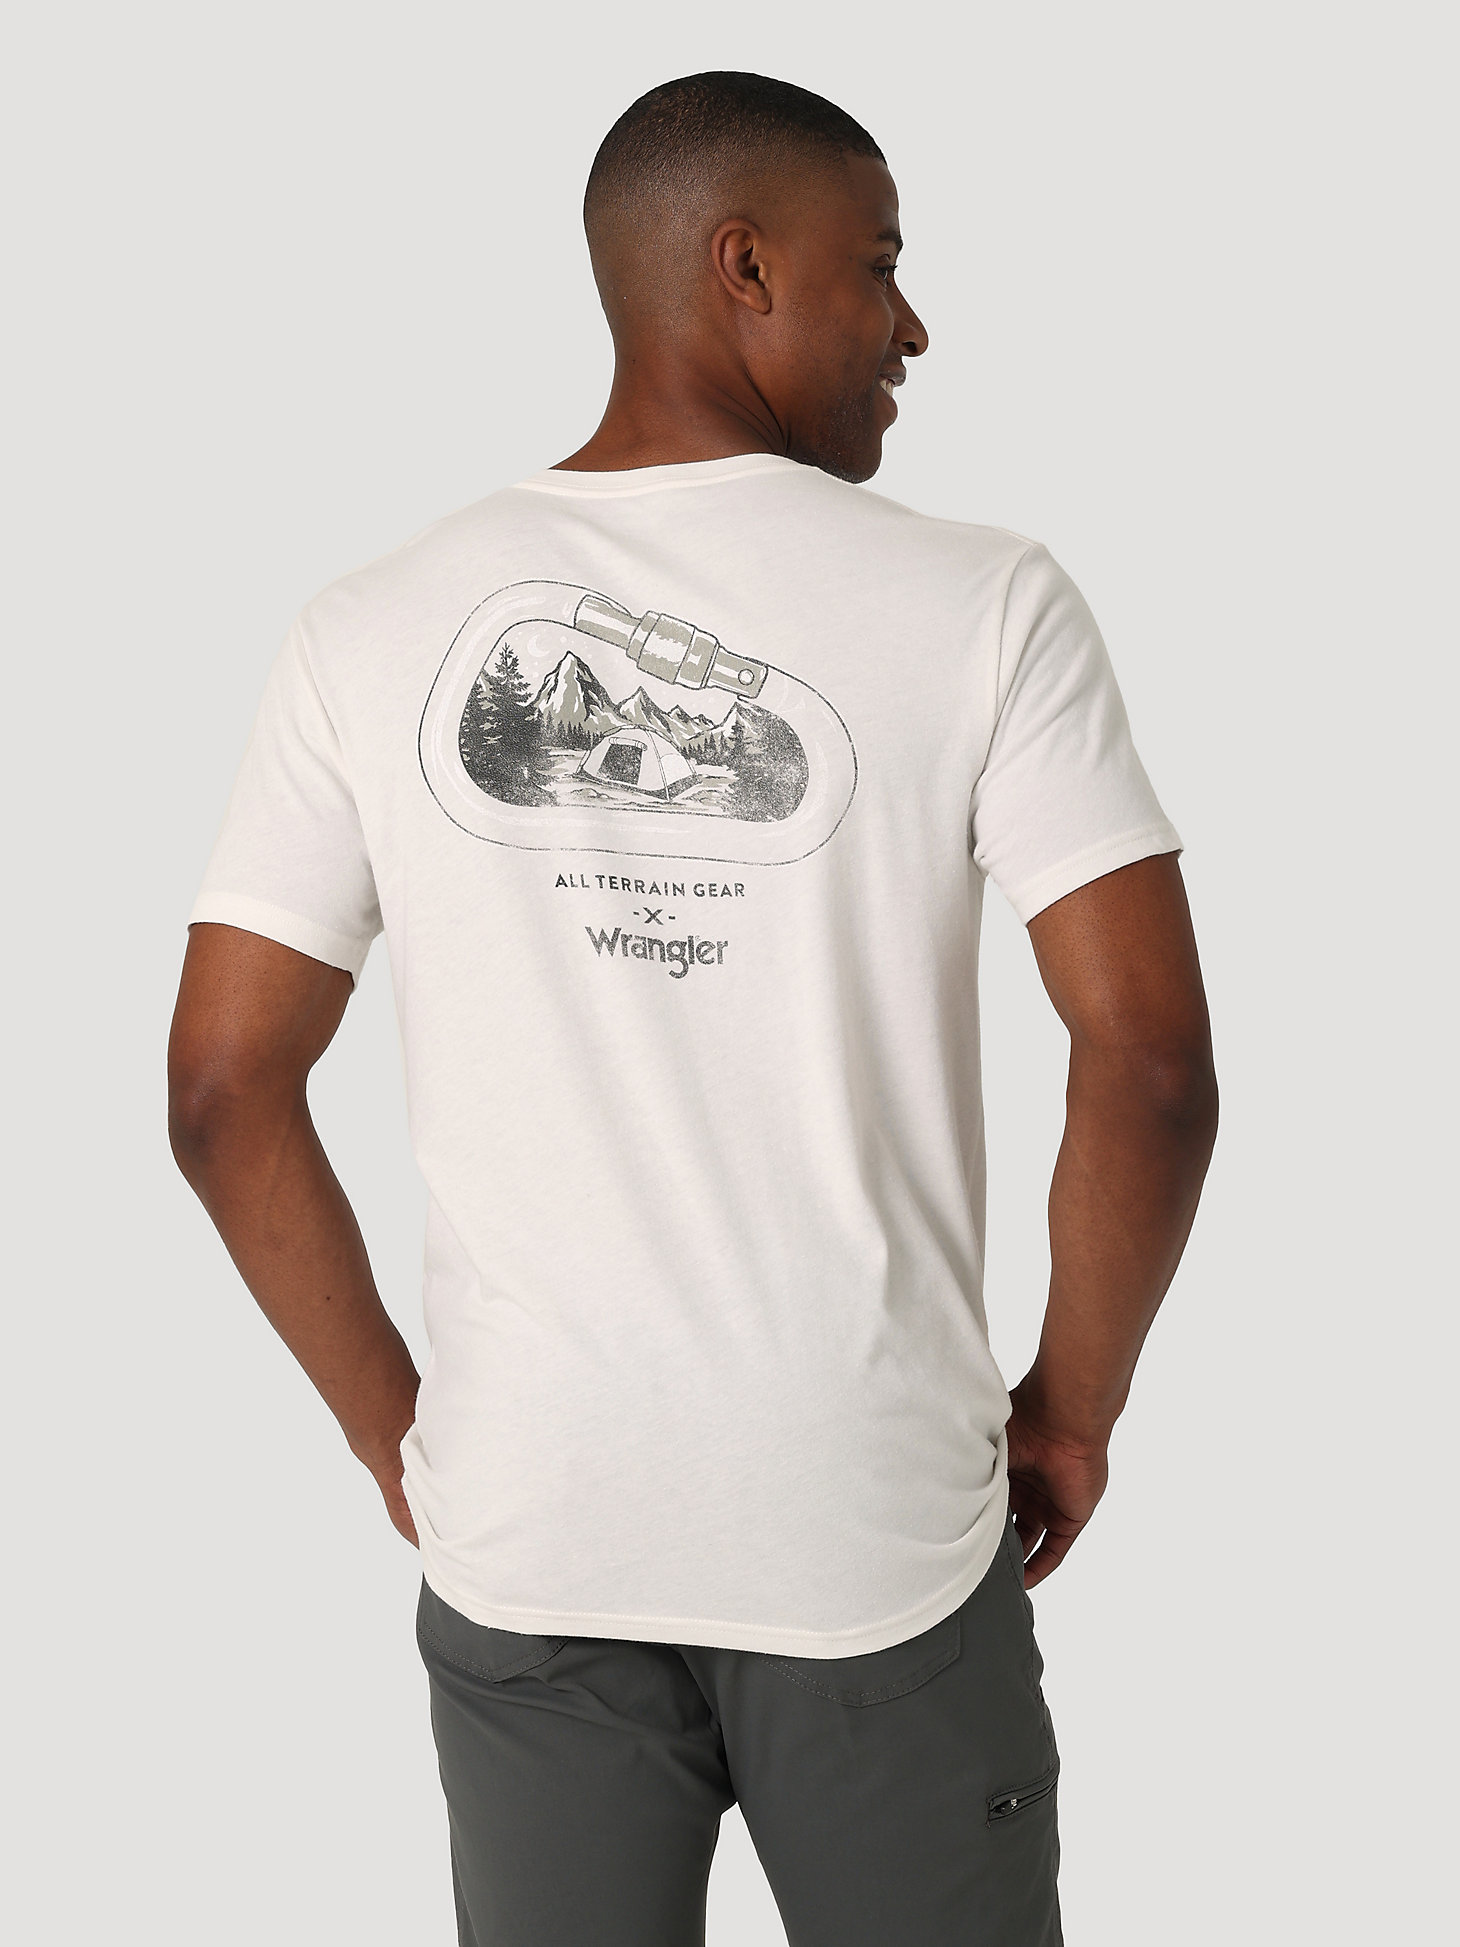 ATG By Wrangler™ Men's Back Graphic T-Shirt in Marshmallow alternative view 1